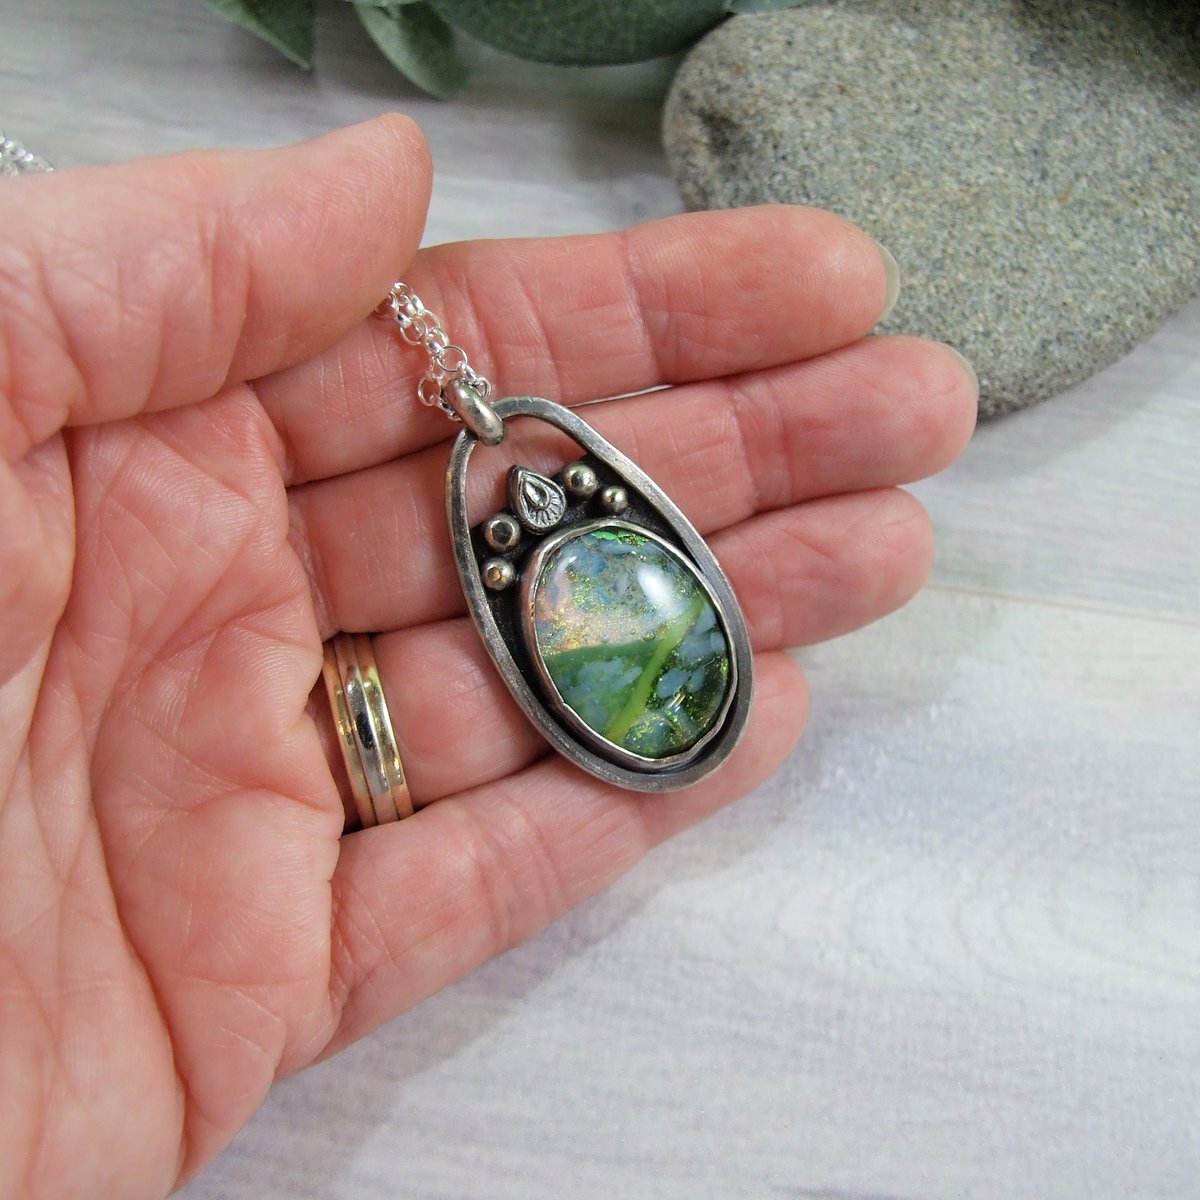 Dichroic Glass Valley Necklace, Sterling Silver... - Folksy folksy.com/items/8335725-… #newonfolksy